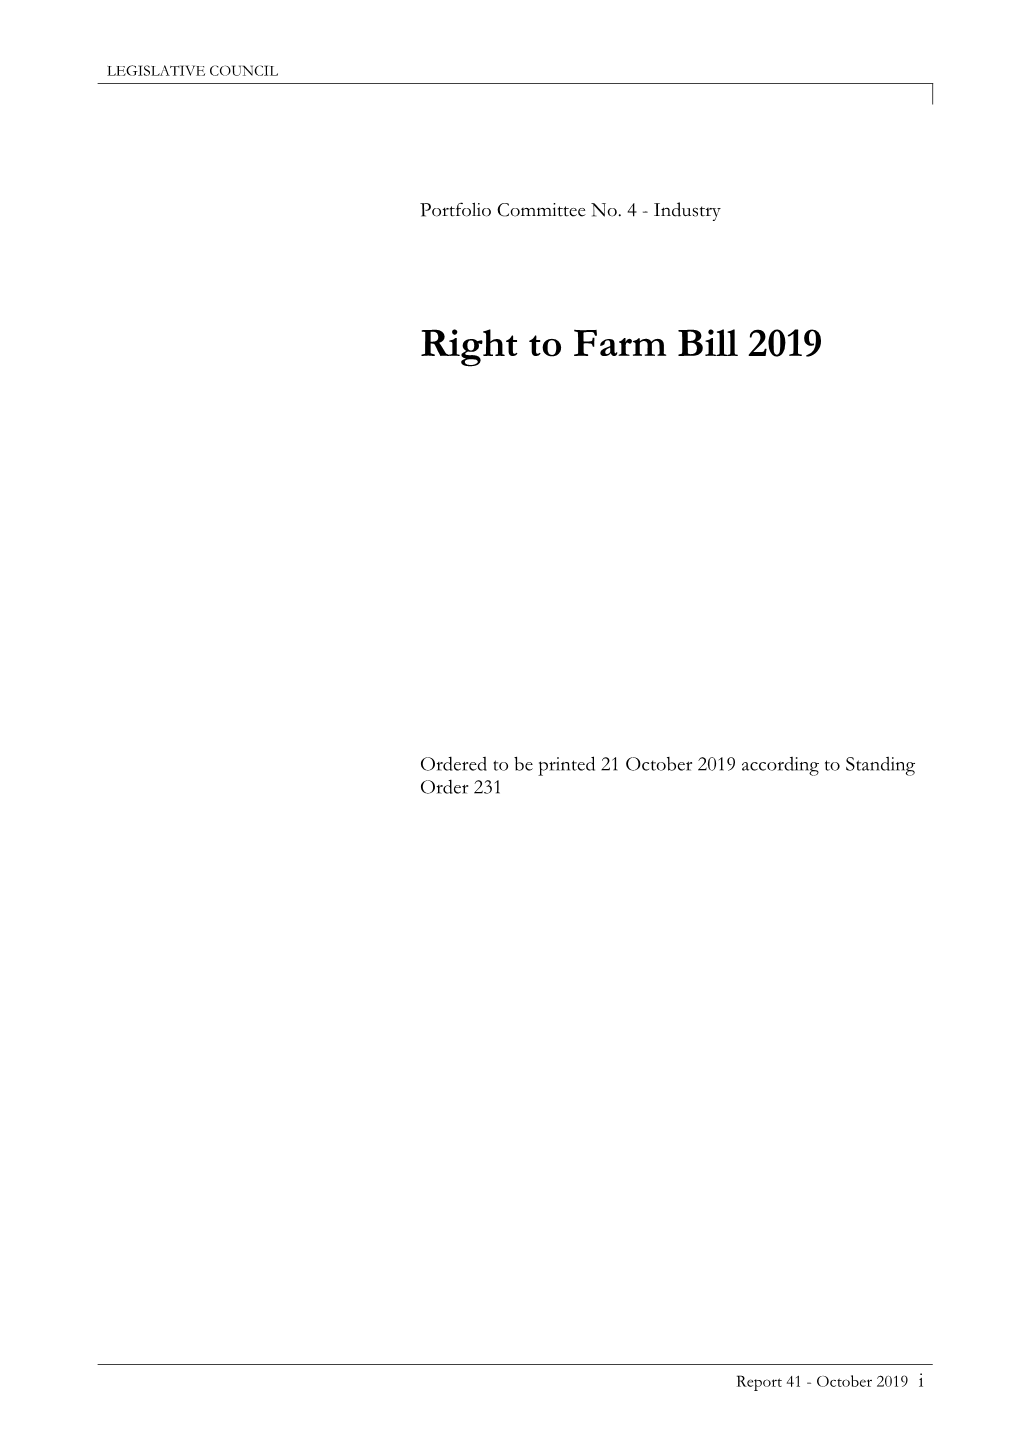 Right to Farm Bill 2019